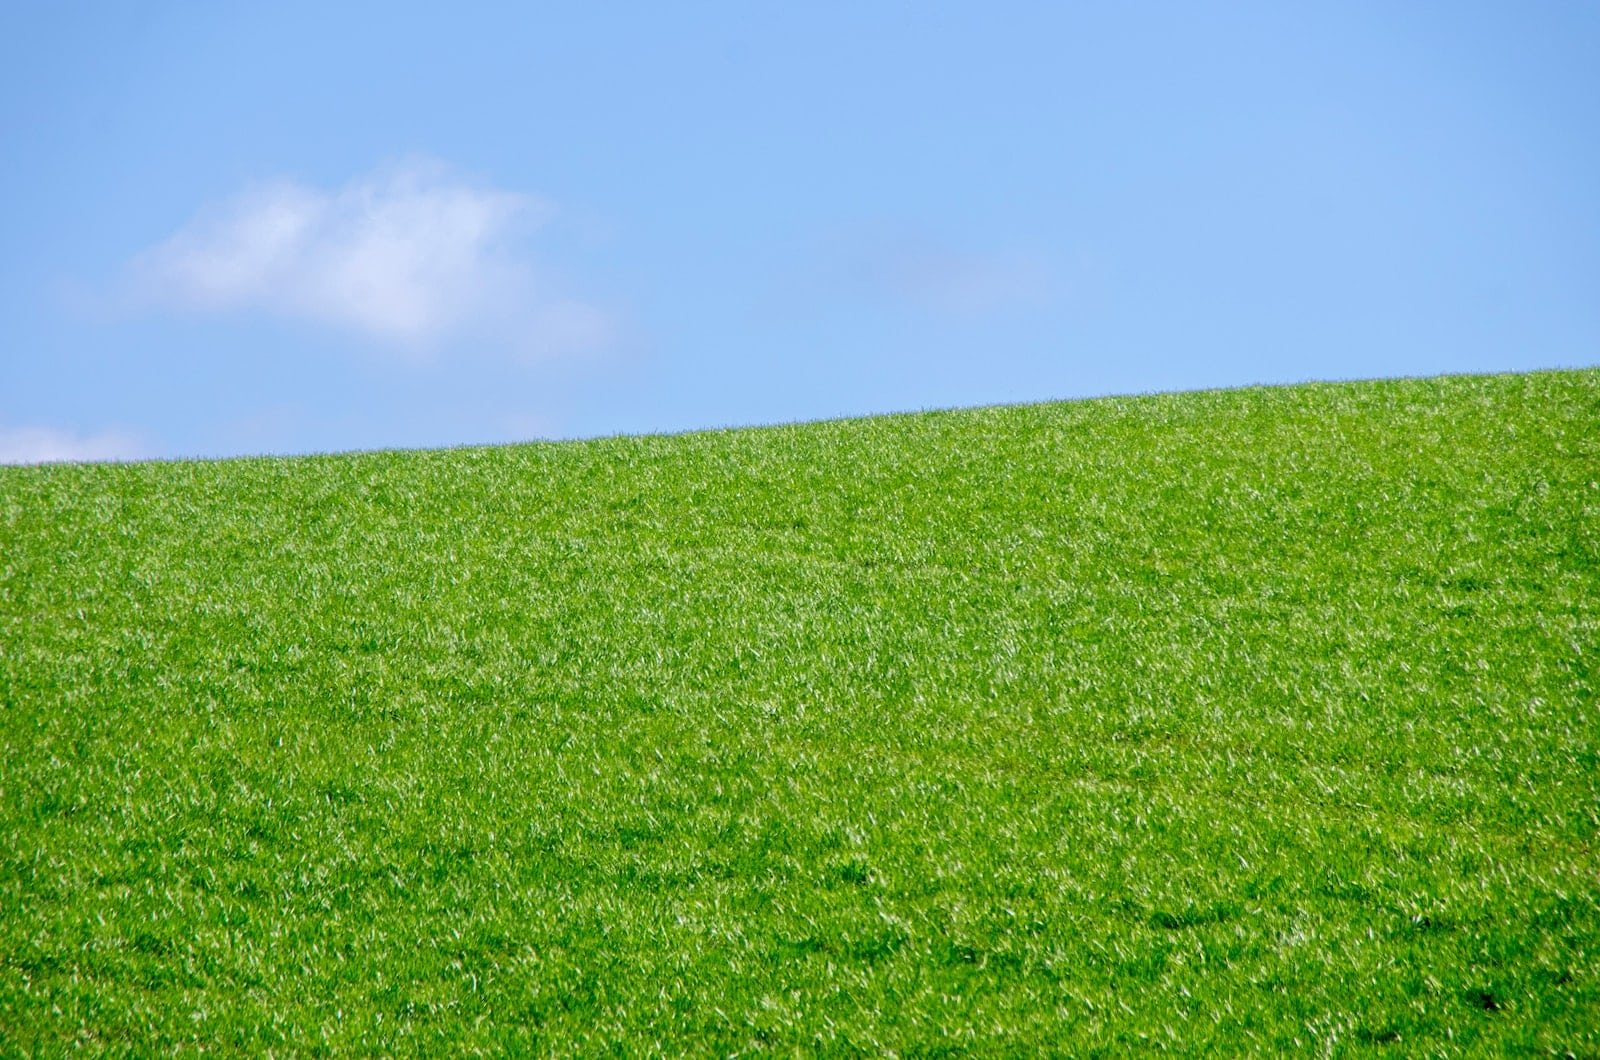 green grass field under blue sky during daytime